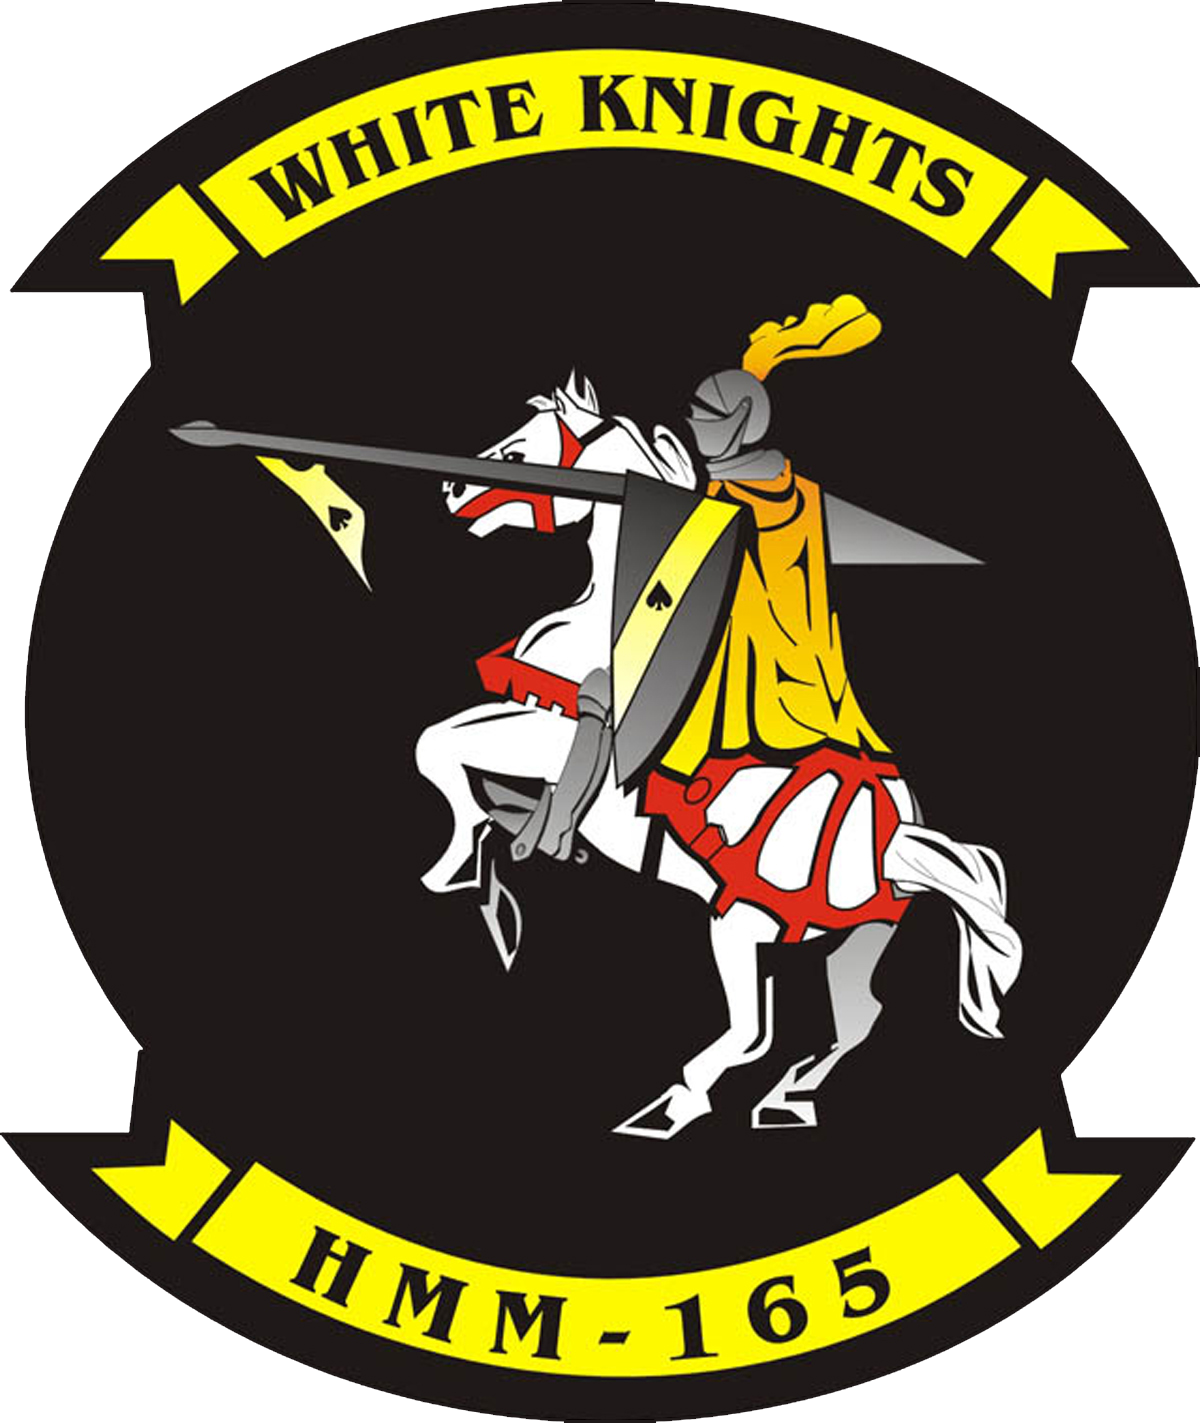 Vmm 165 White Knights (1200x1423)